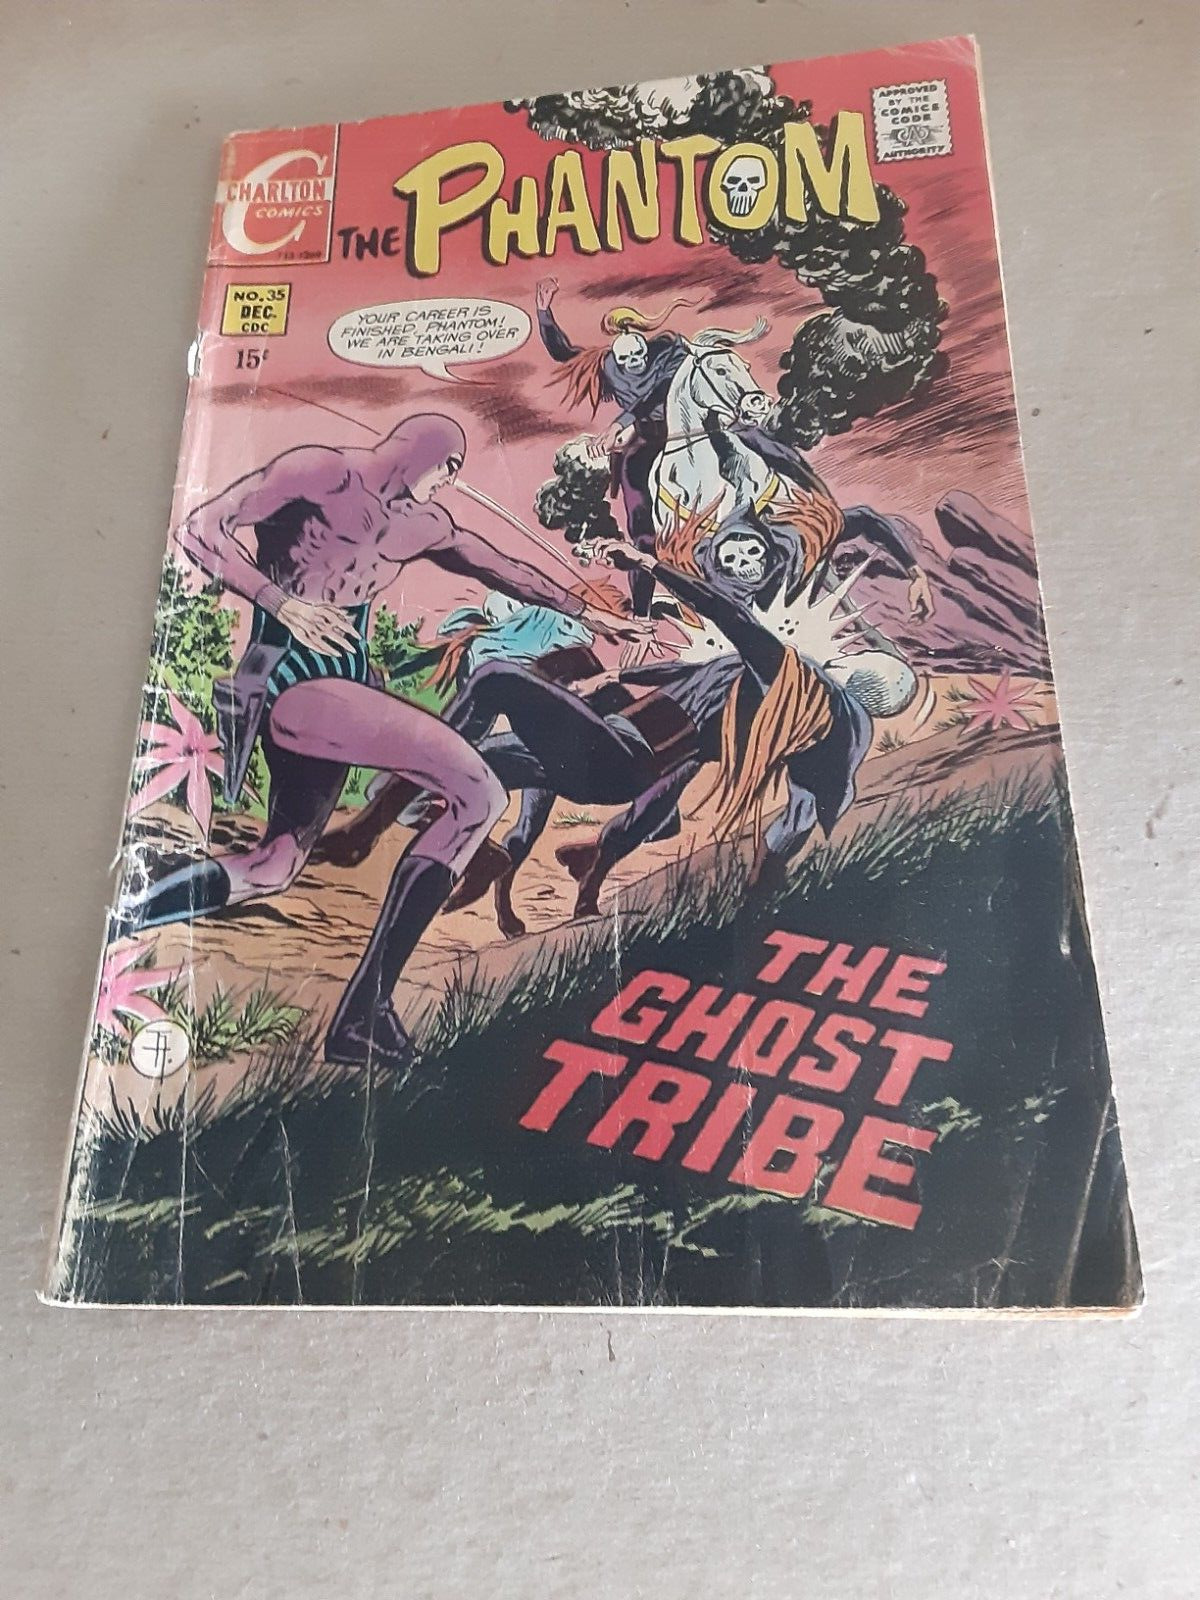 Charlton THE PHANTOM No. 35 (1969) The Ghost Tribe VG